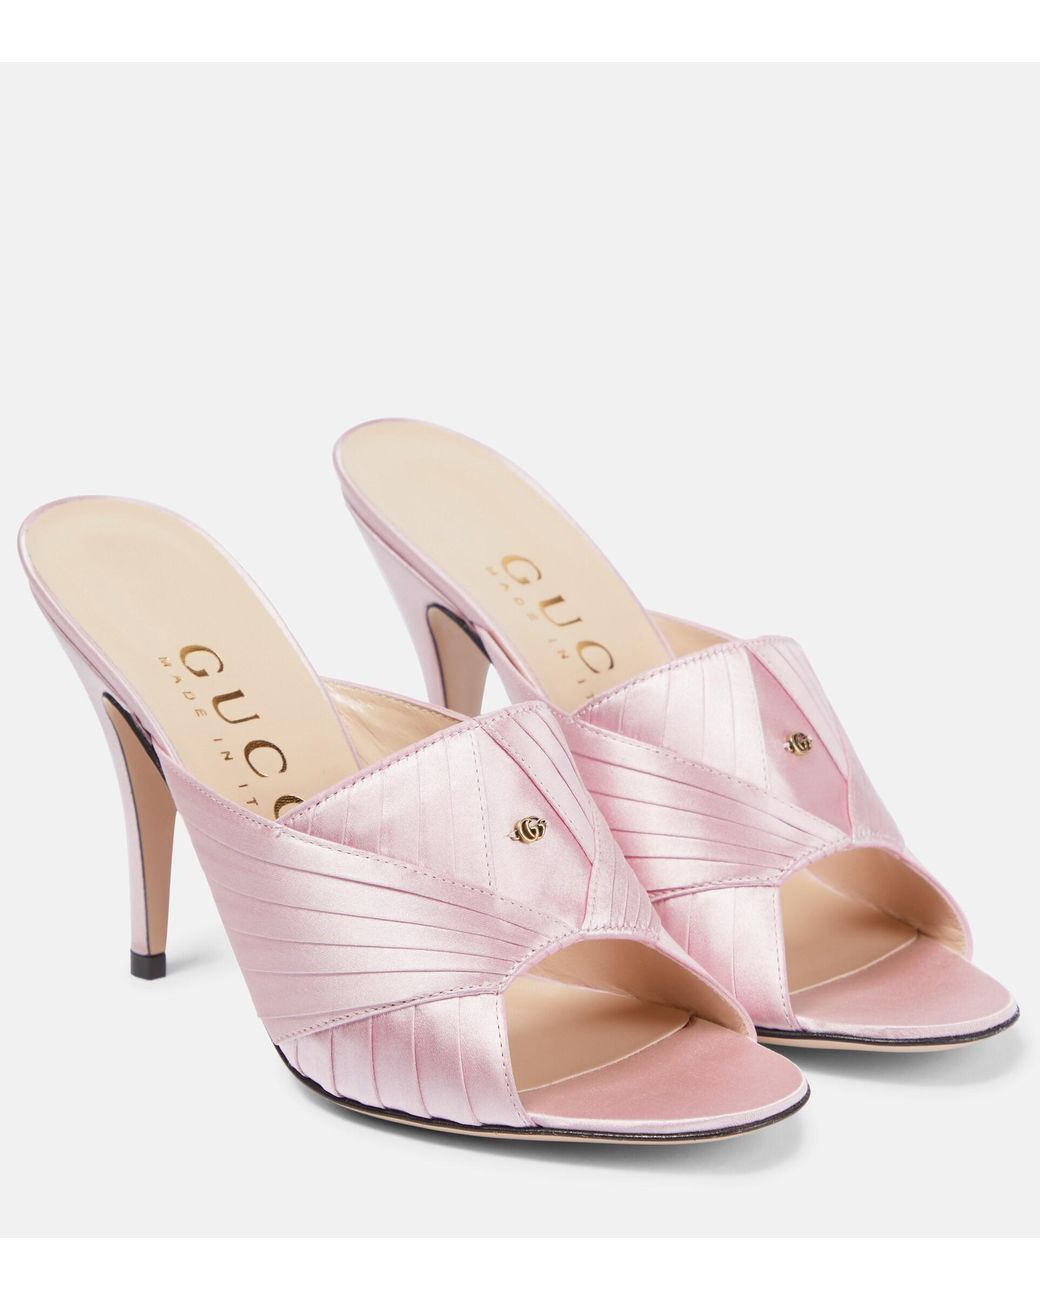 Gucci Silk Satin Mules in Pink | Lyst